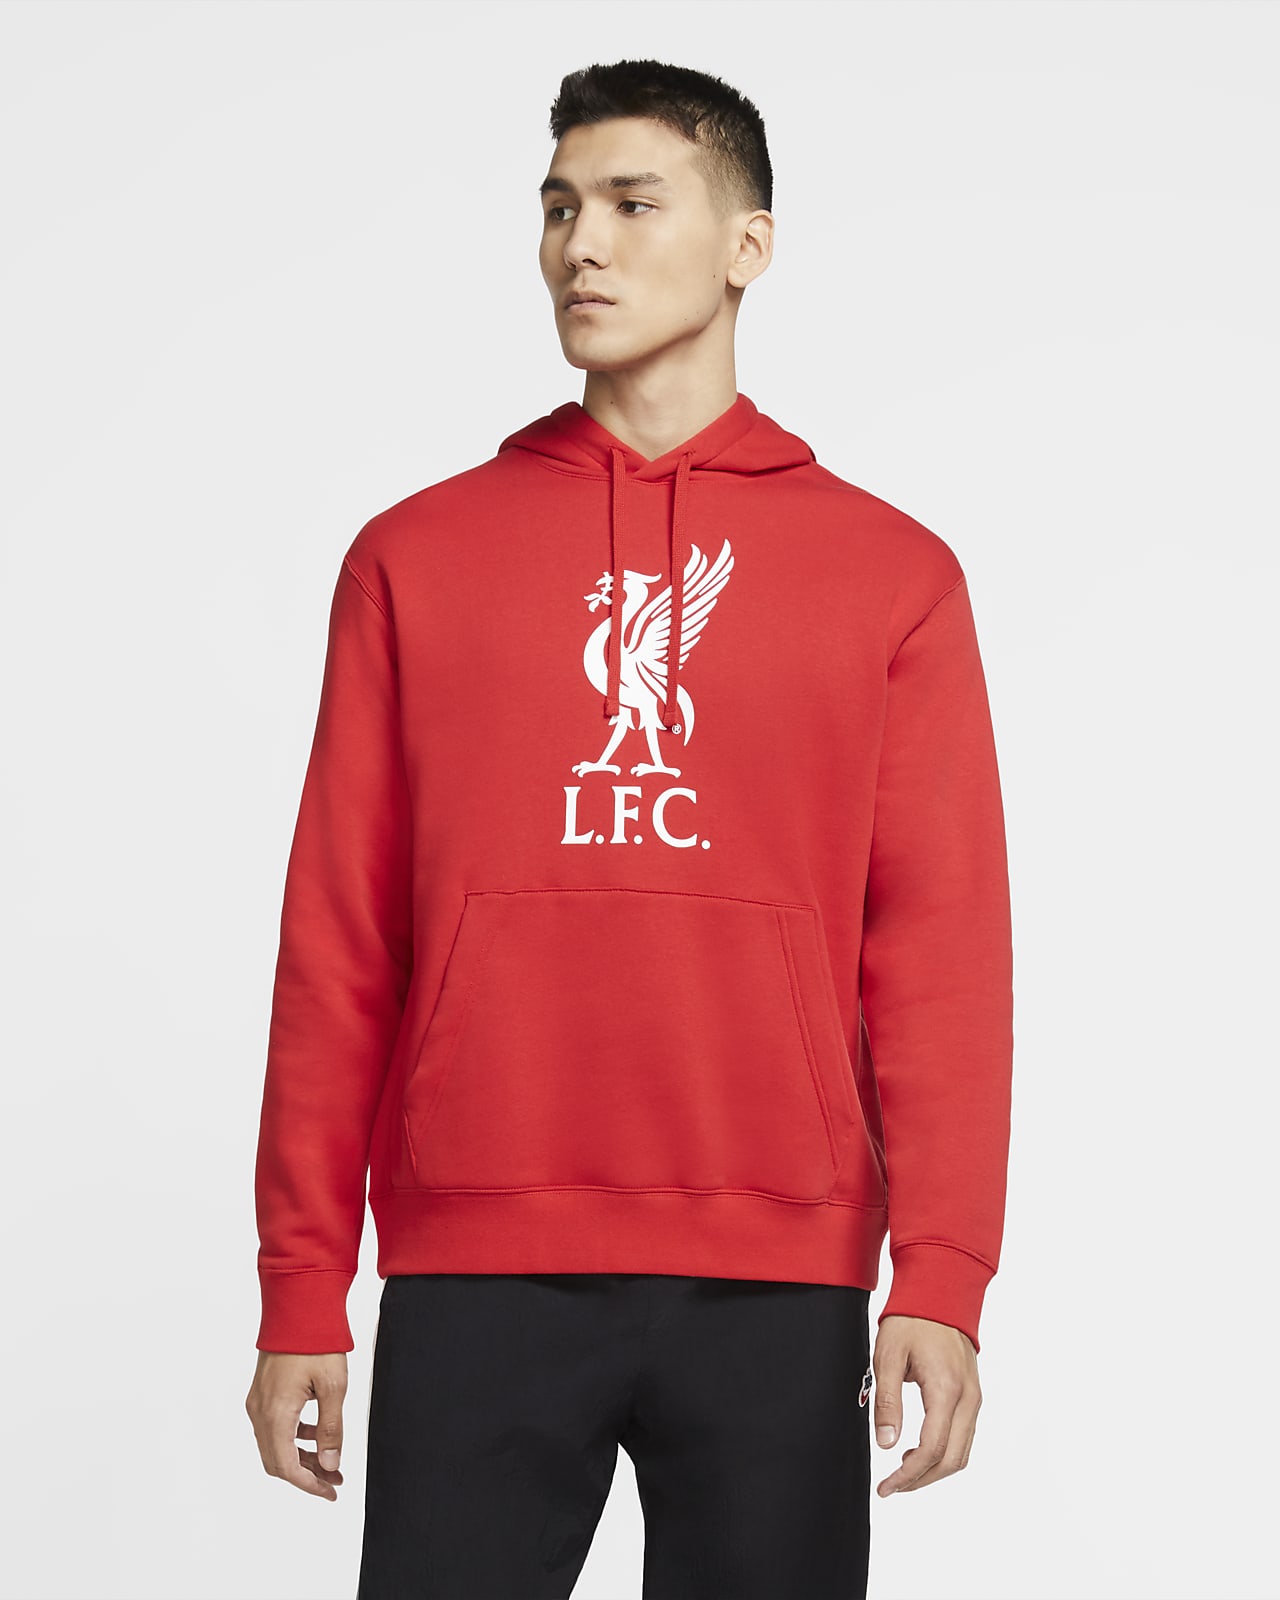 Liverpool Fc Nike Deals, 53% OFF | www.ingeniovirtual.com